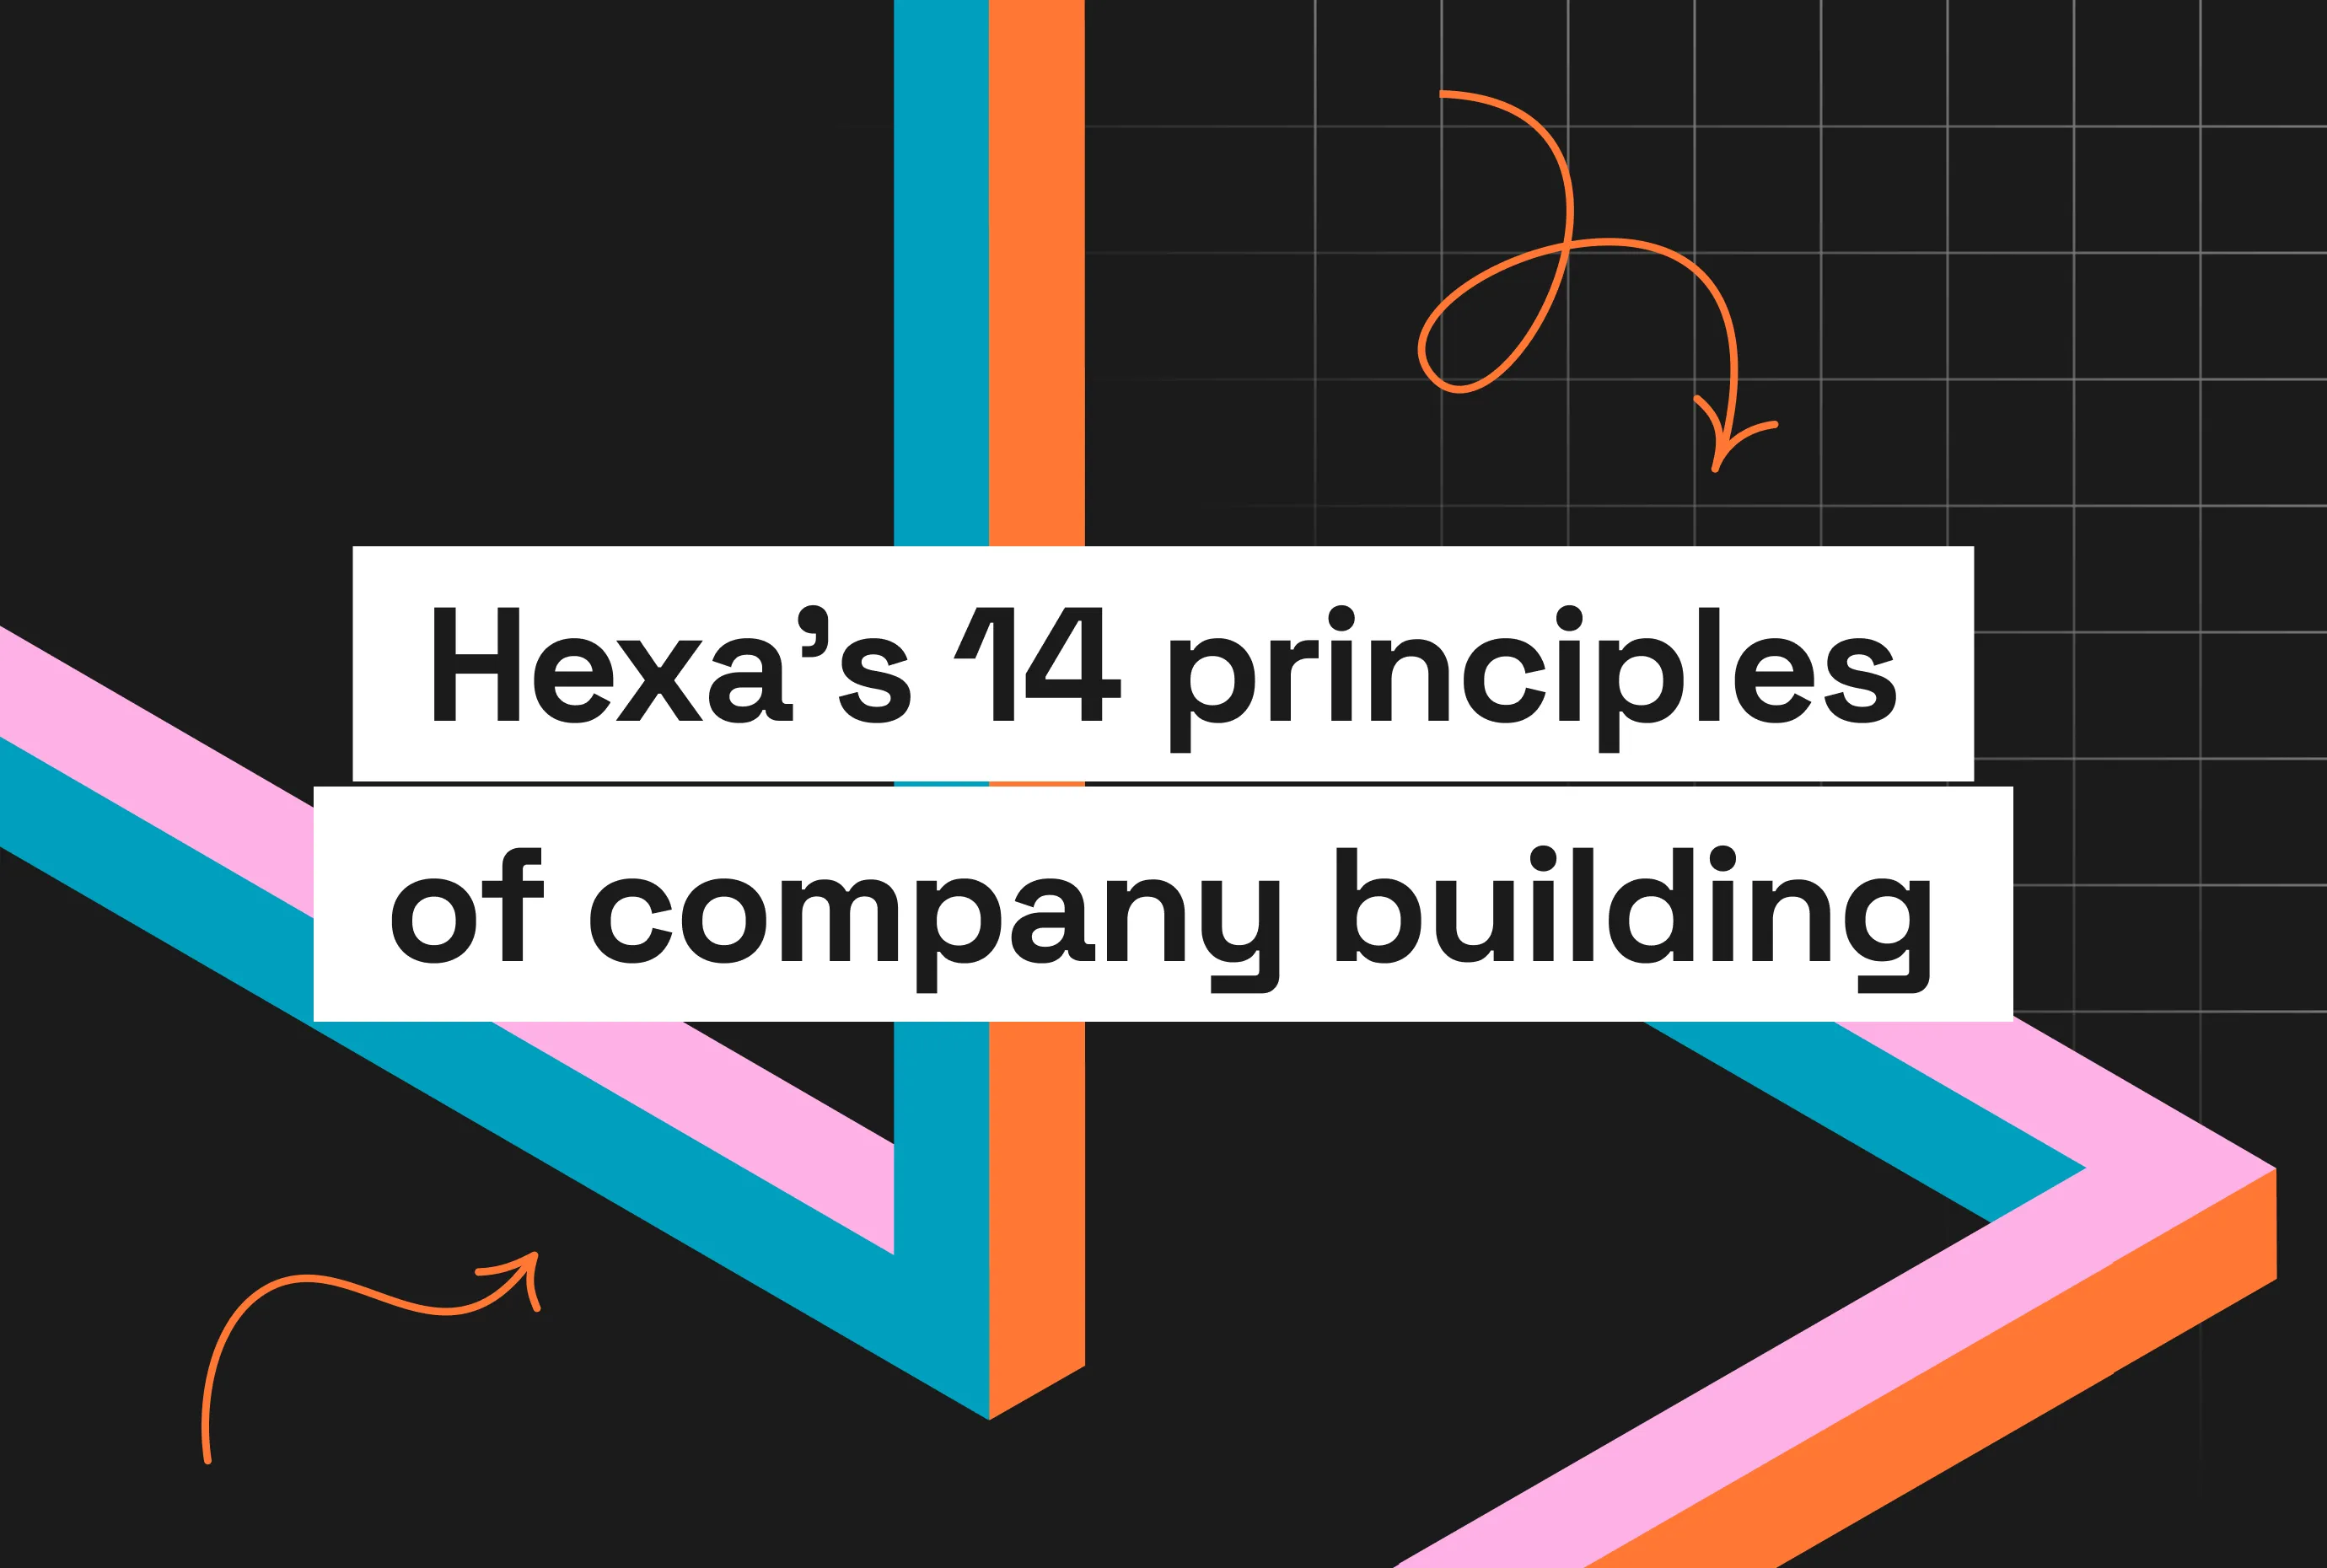 Hexa’s 14 principles of company building